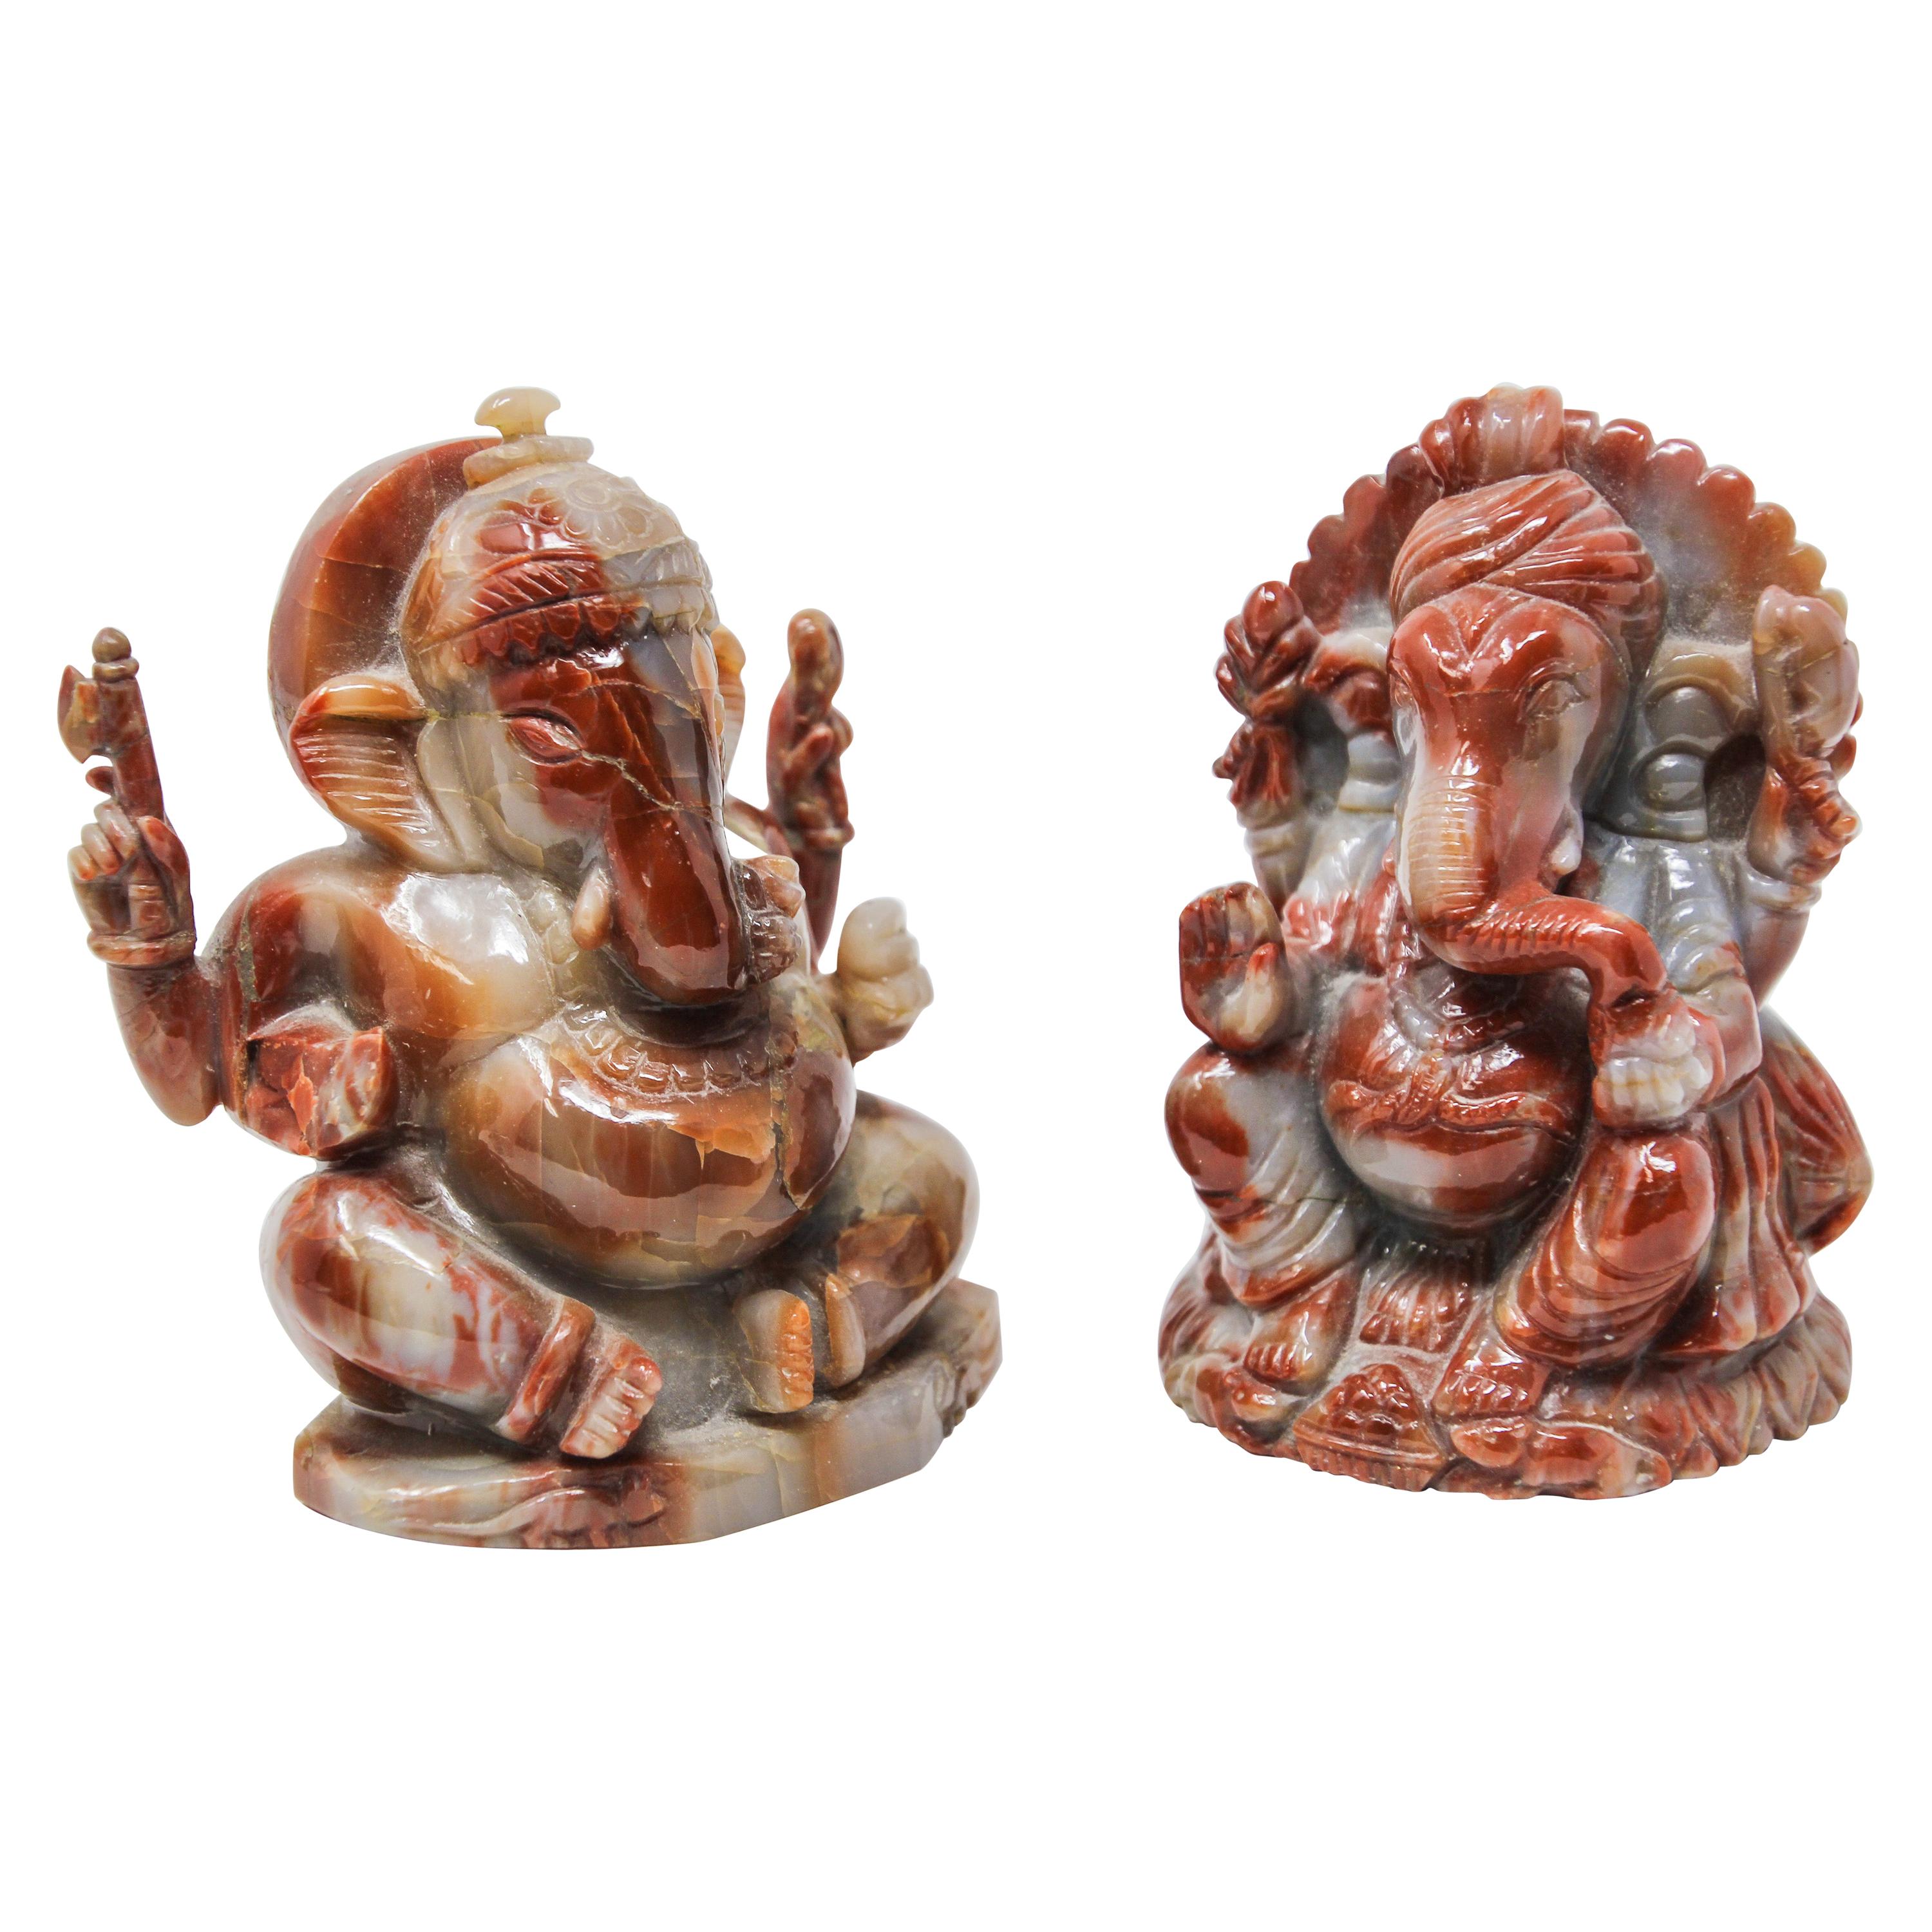 Two Stones Ganesh Hindu Diety Statues